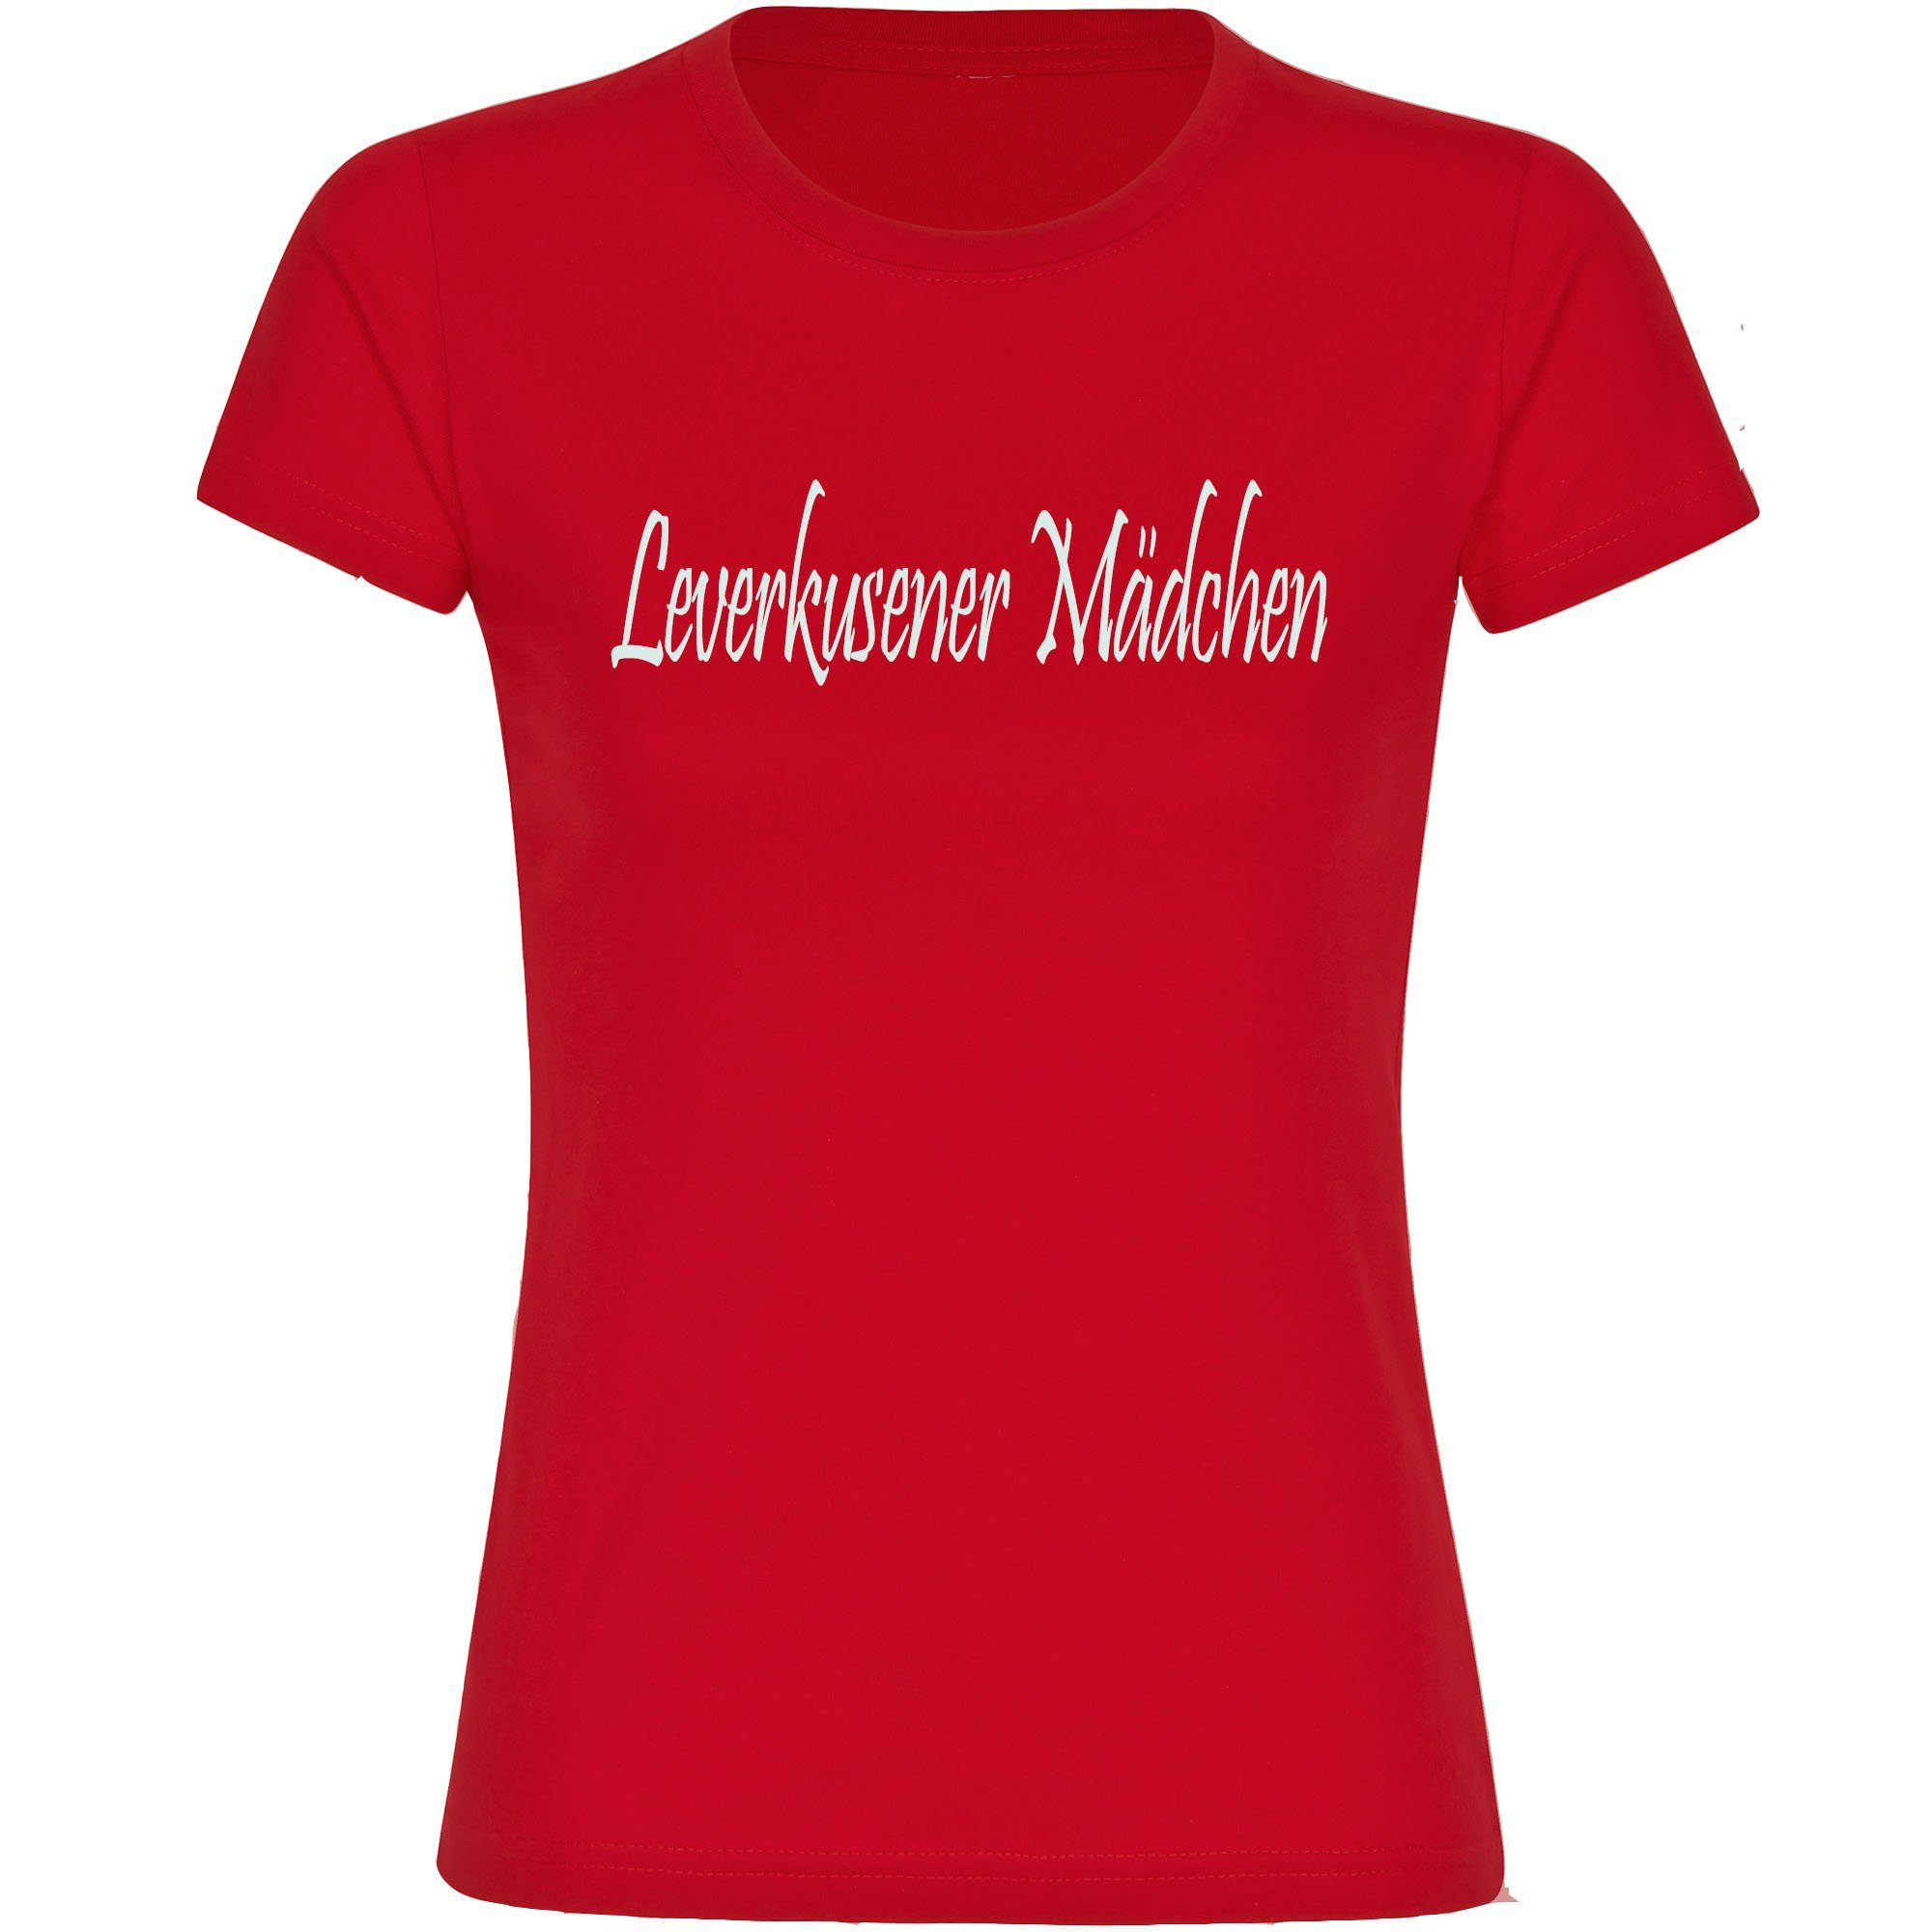 multifanshop T-Shirt Kinder Leverkusen - Leverkusener Mädchen - Boy Girl